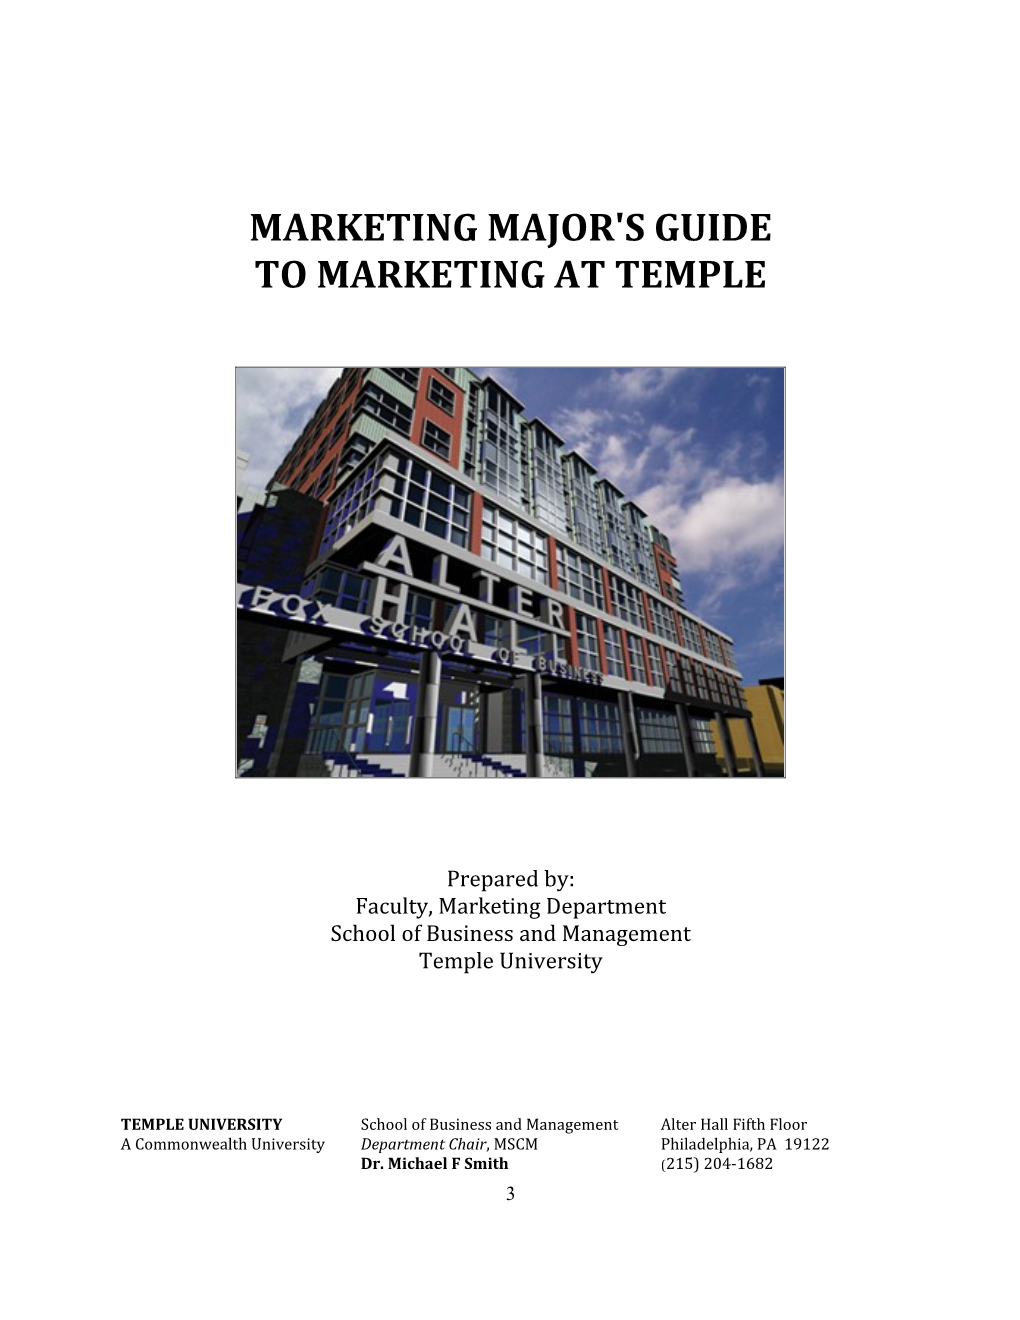 A Marketing Major's Guide